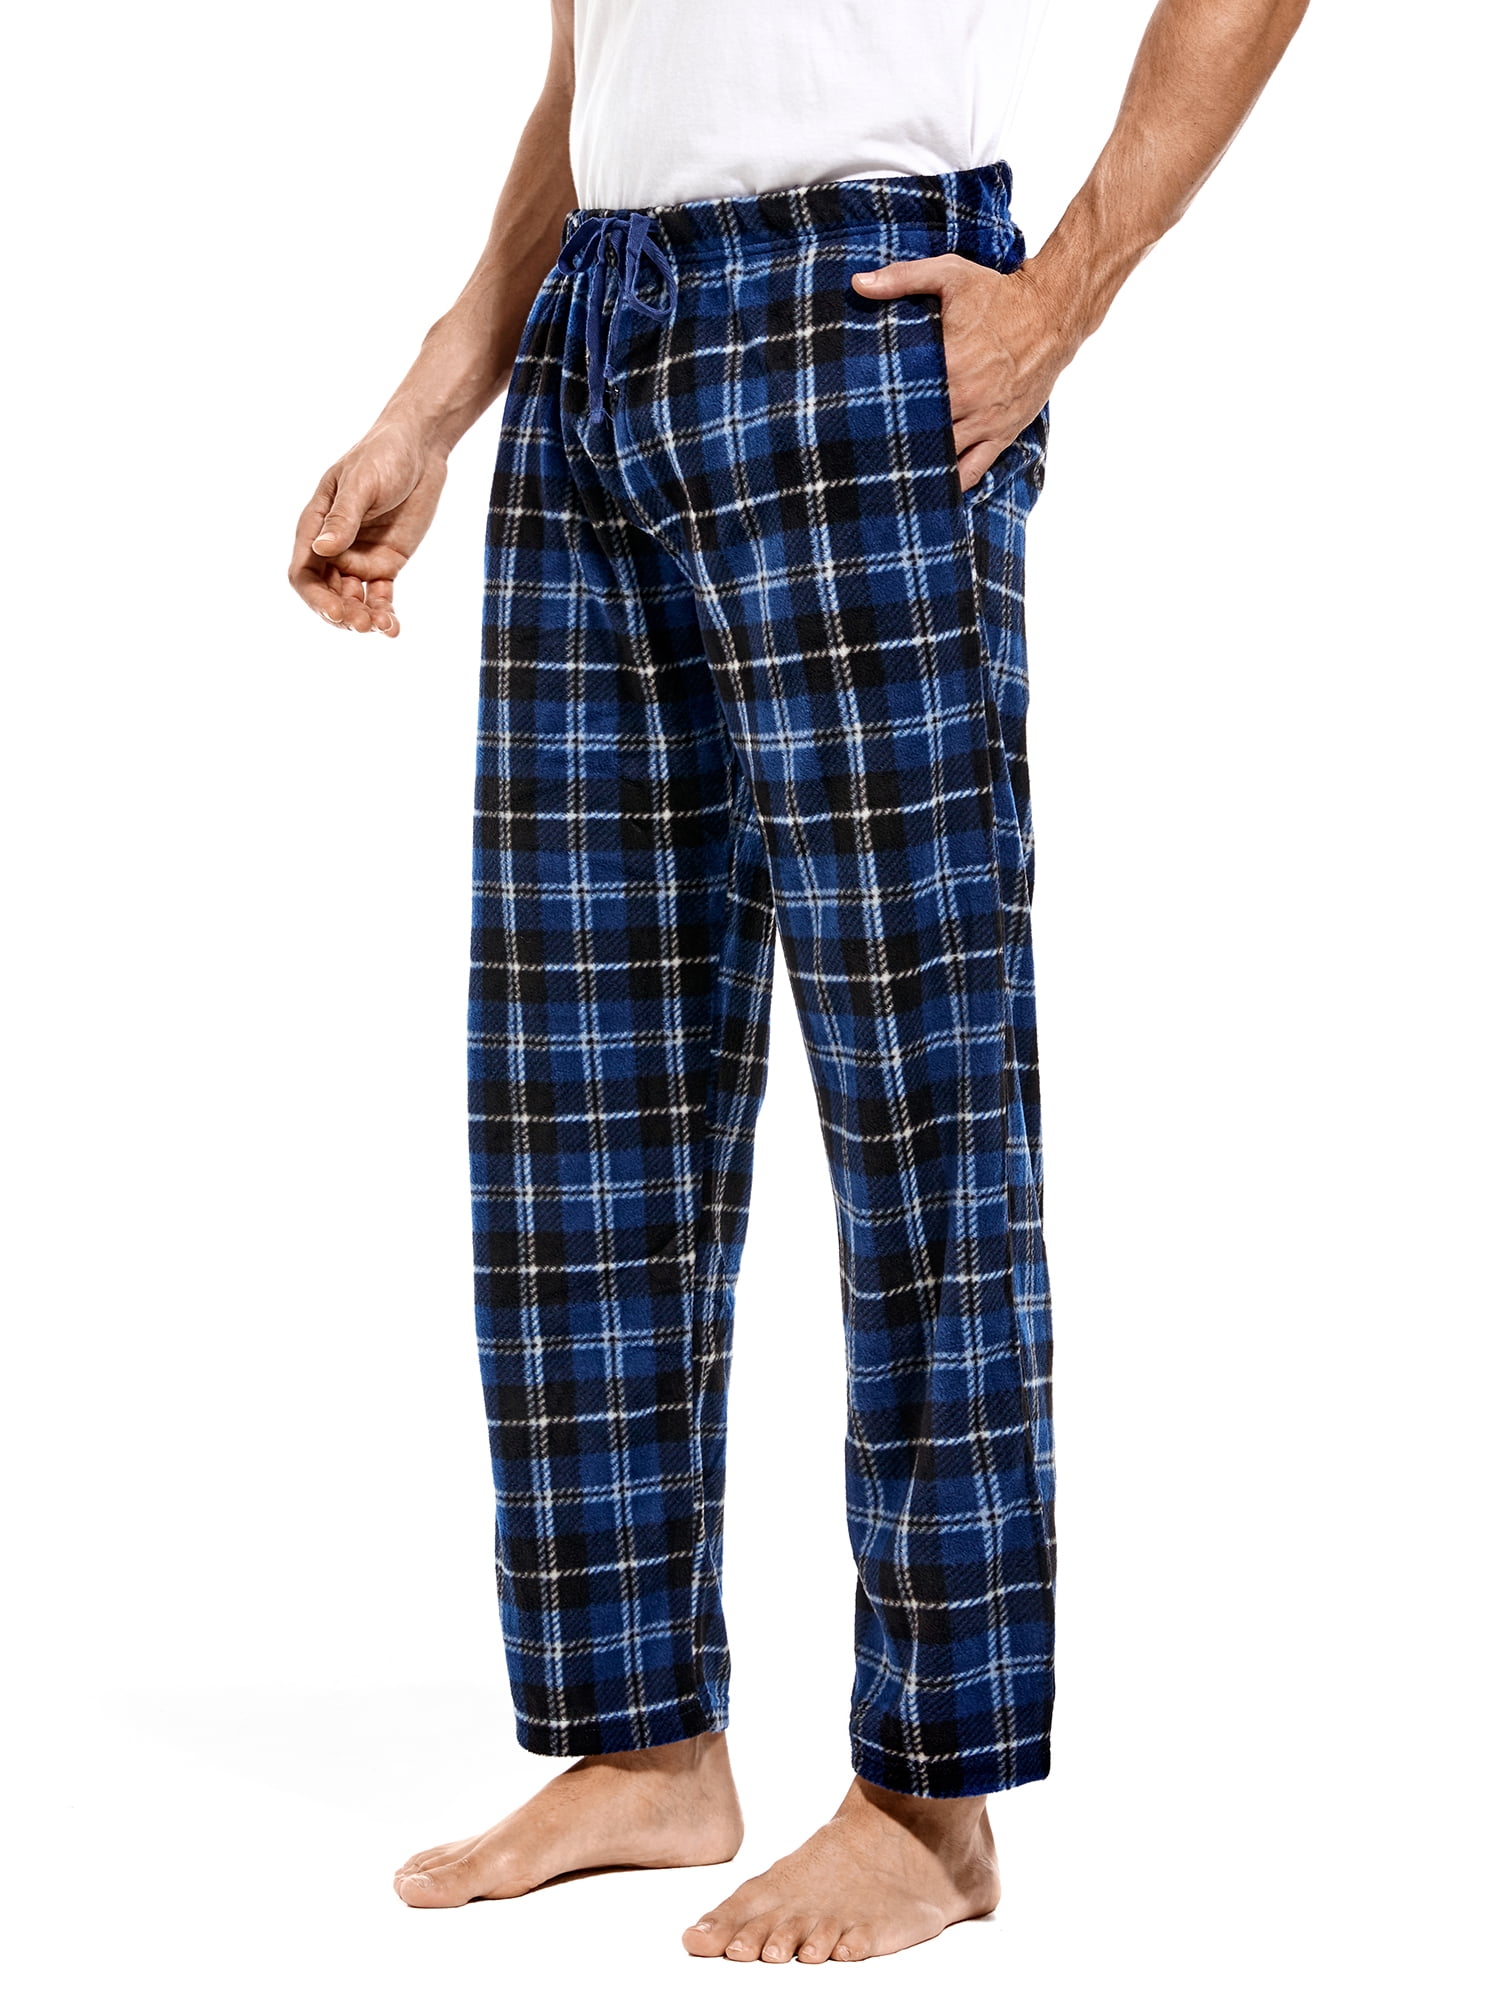 Men's Plaid Pajama Bottoms, Men's Plaid Pajama Pants